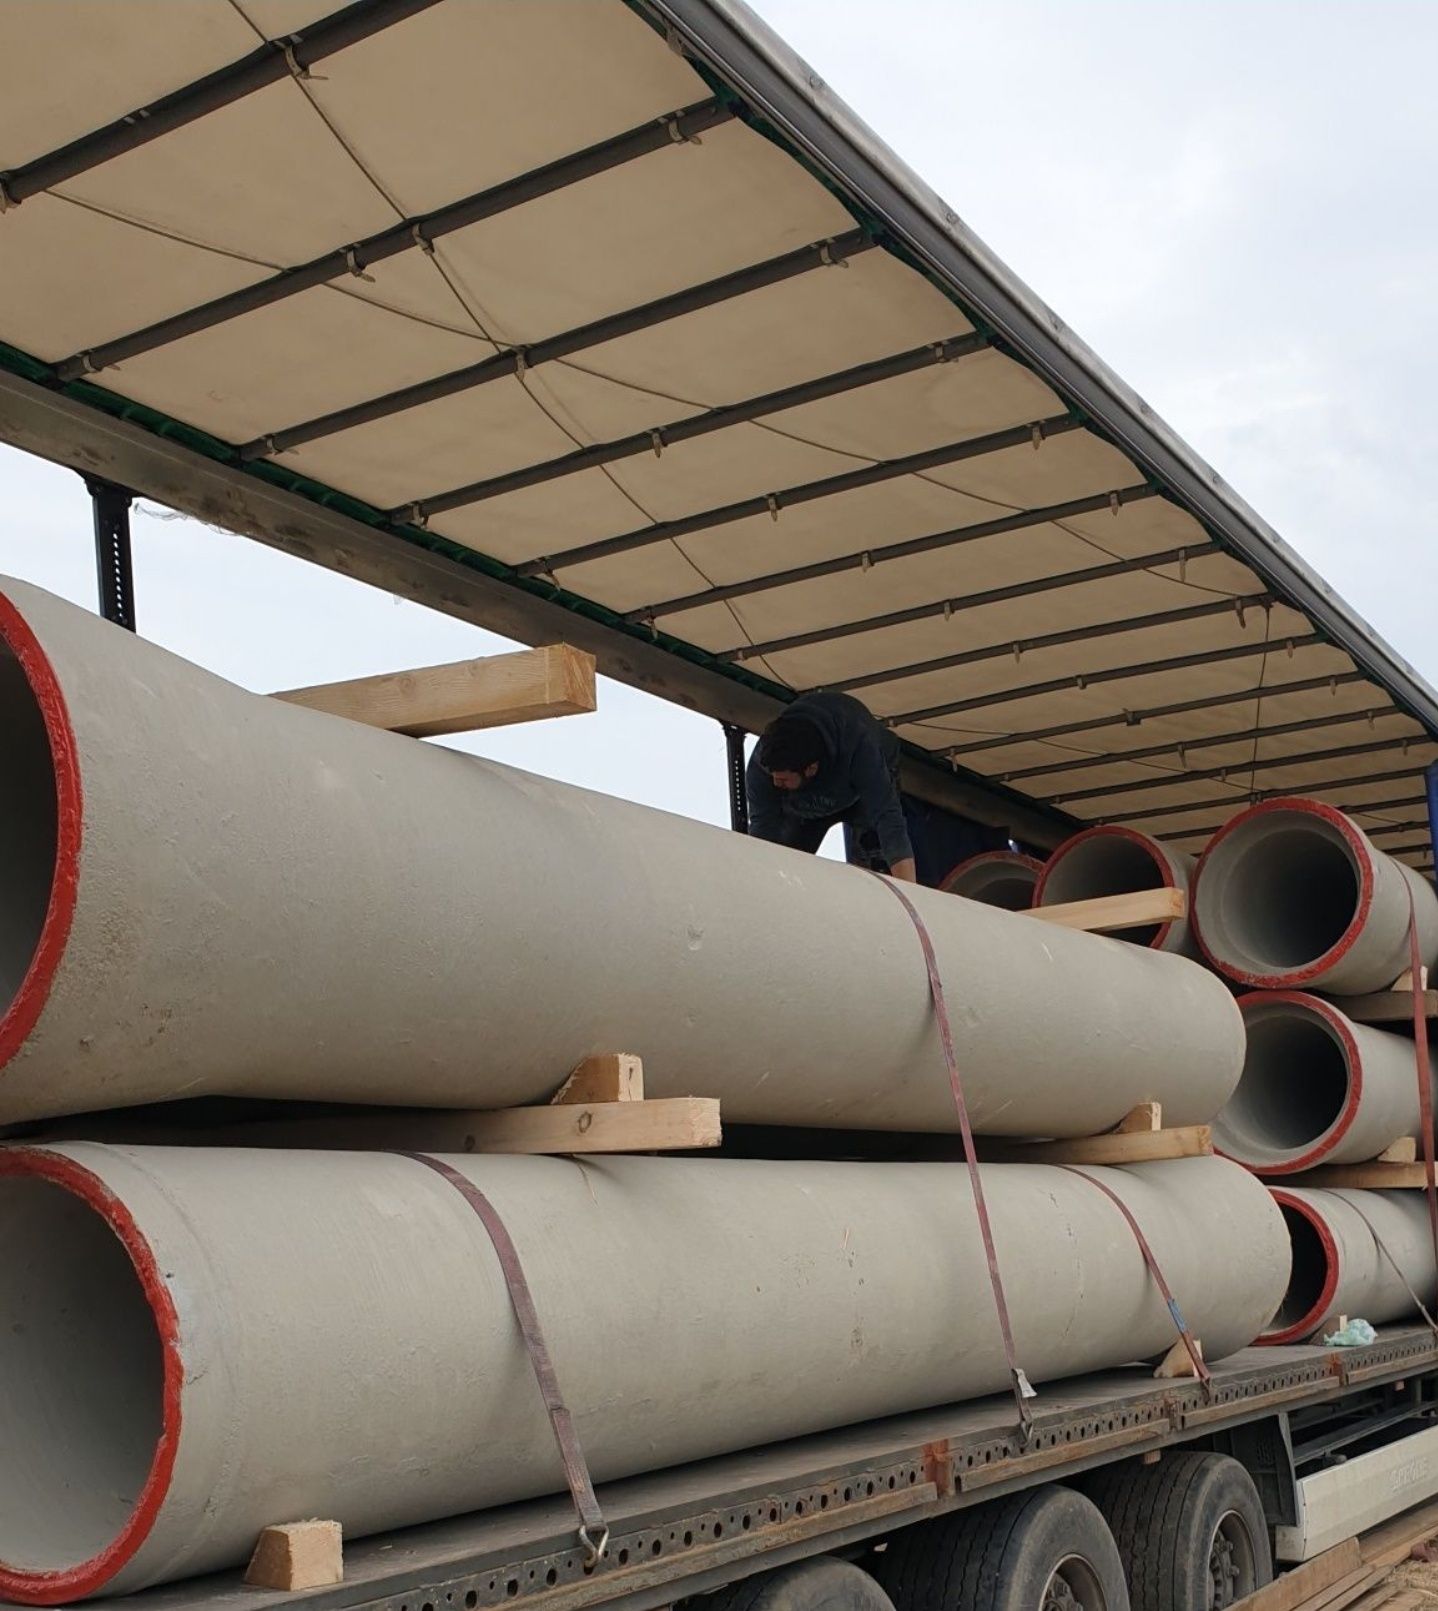 Tuburi din beton armat tip premo lungime 5 m